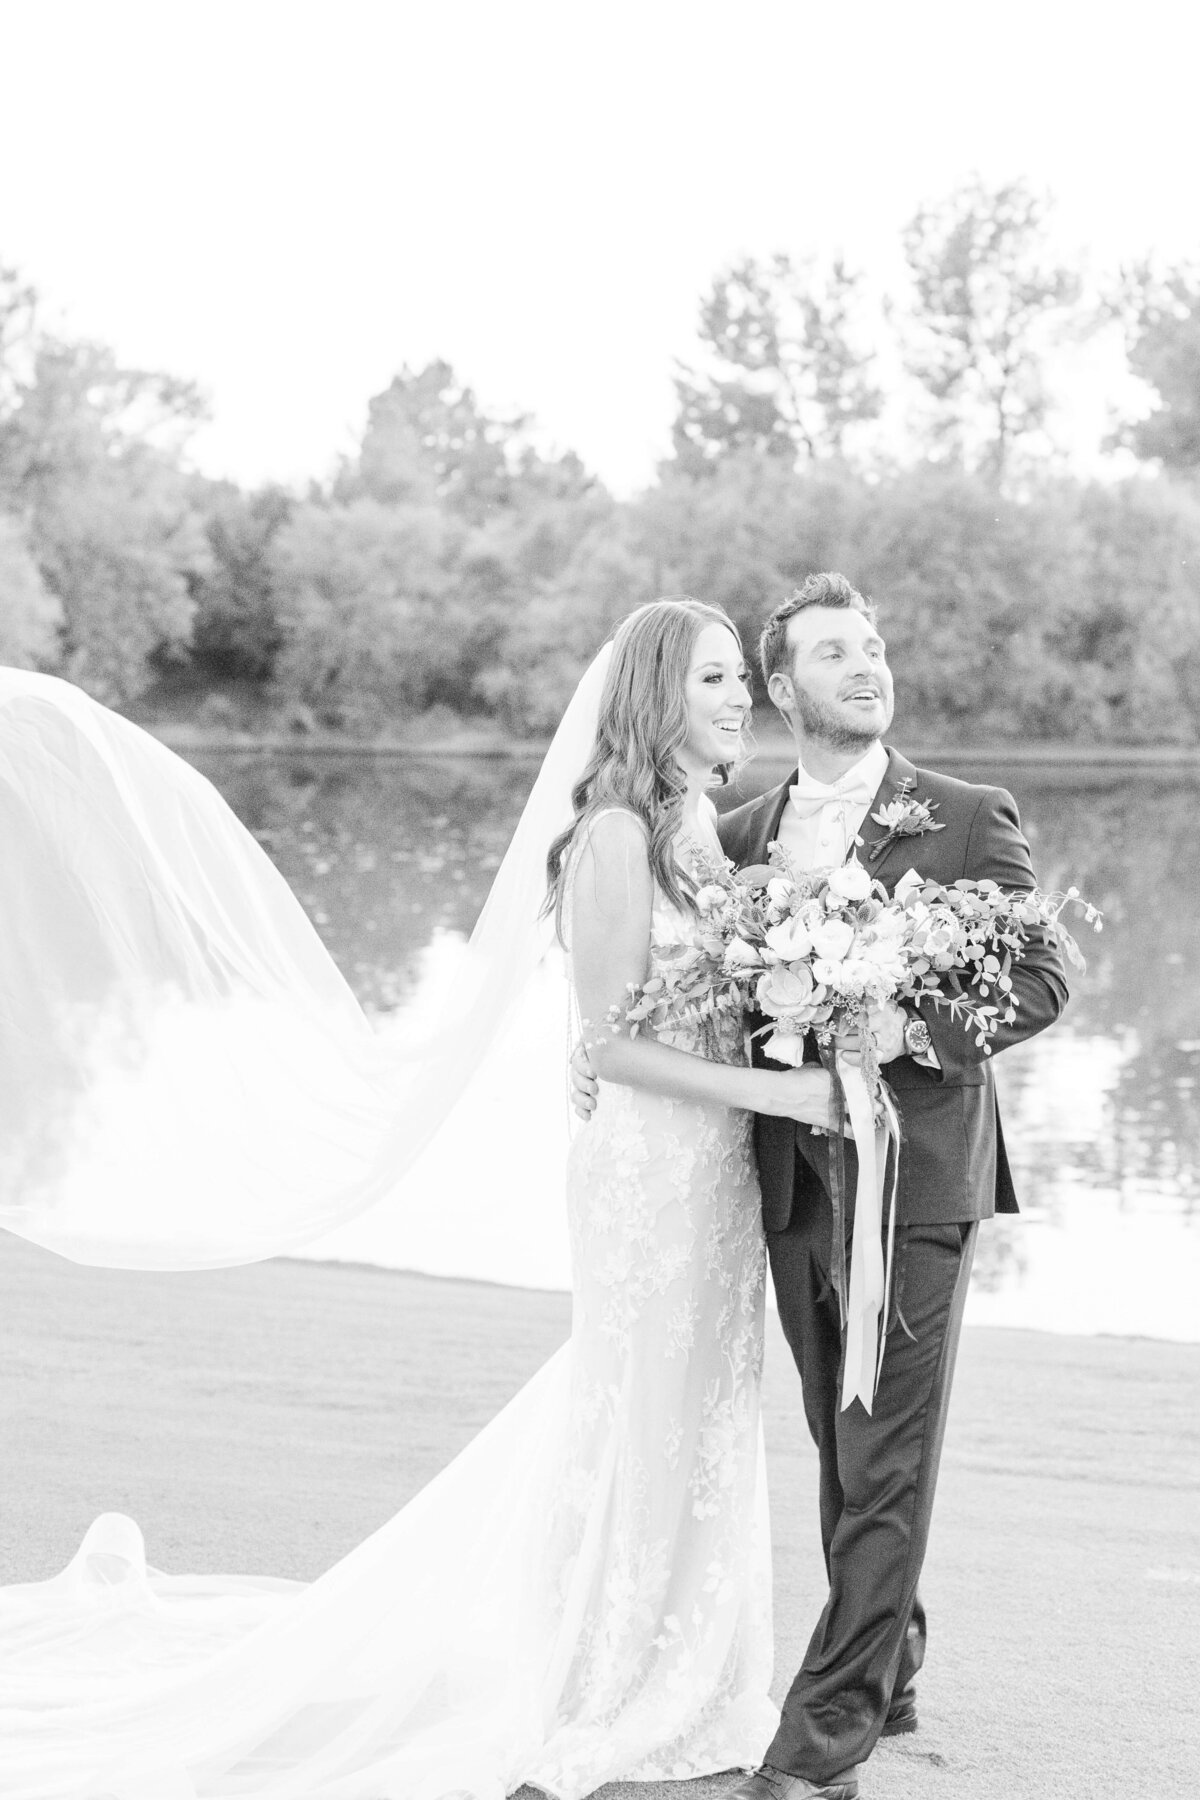 Top Wedding Photographer in Gilbert Arizona - Bethie Grondin14